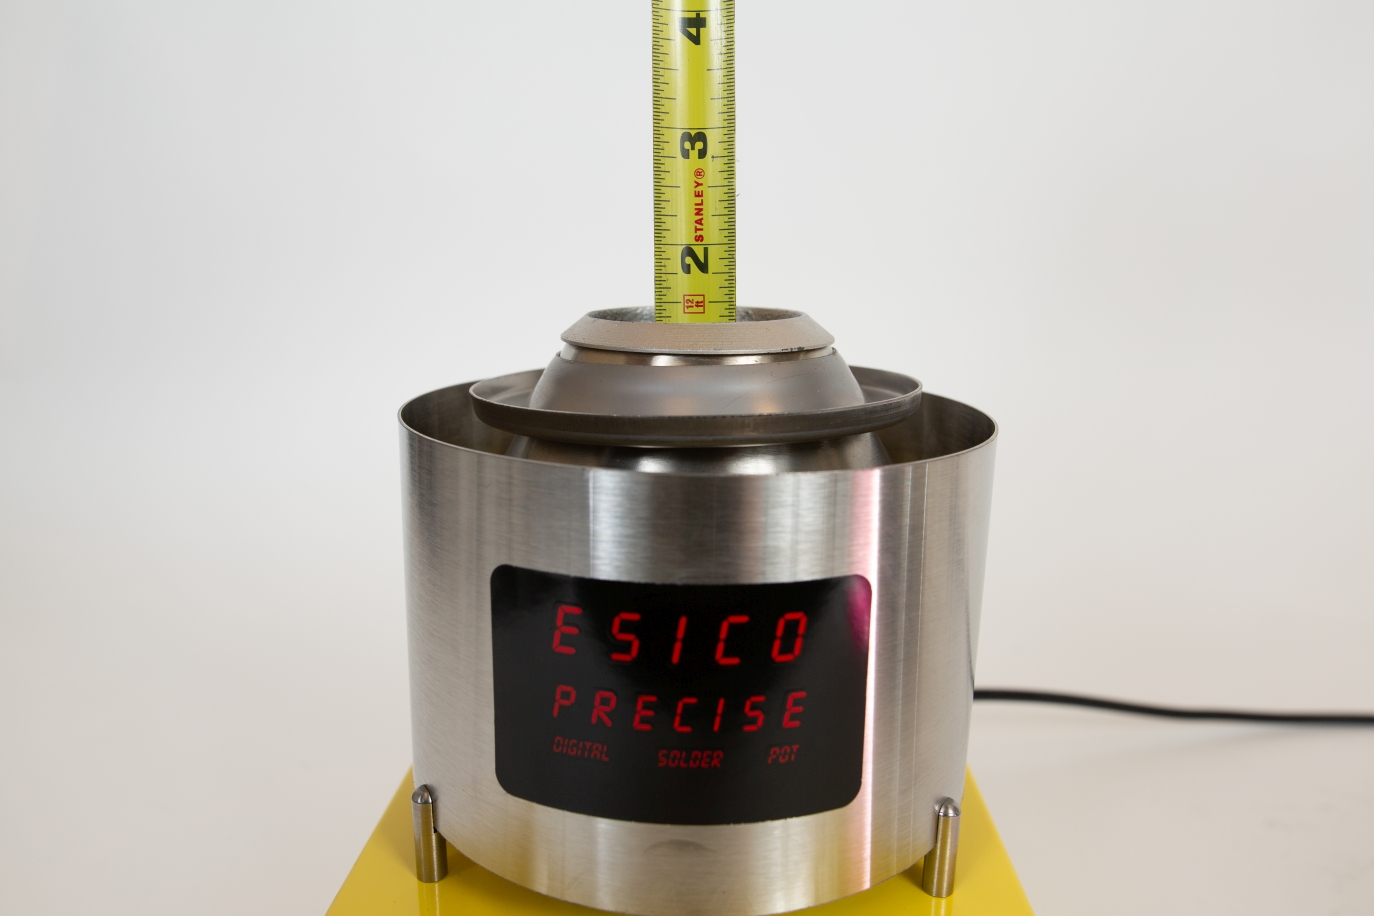 Esico-Triton Solder Pot  Stellar Technical Products